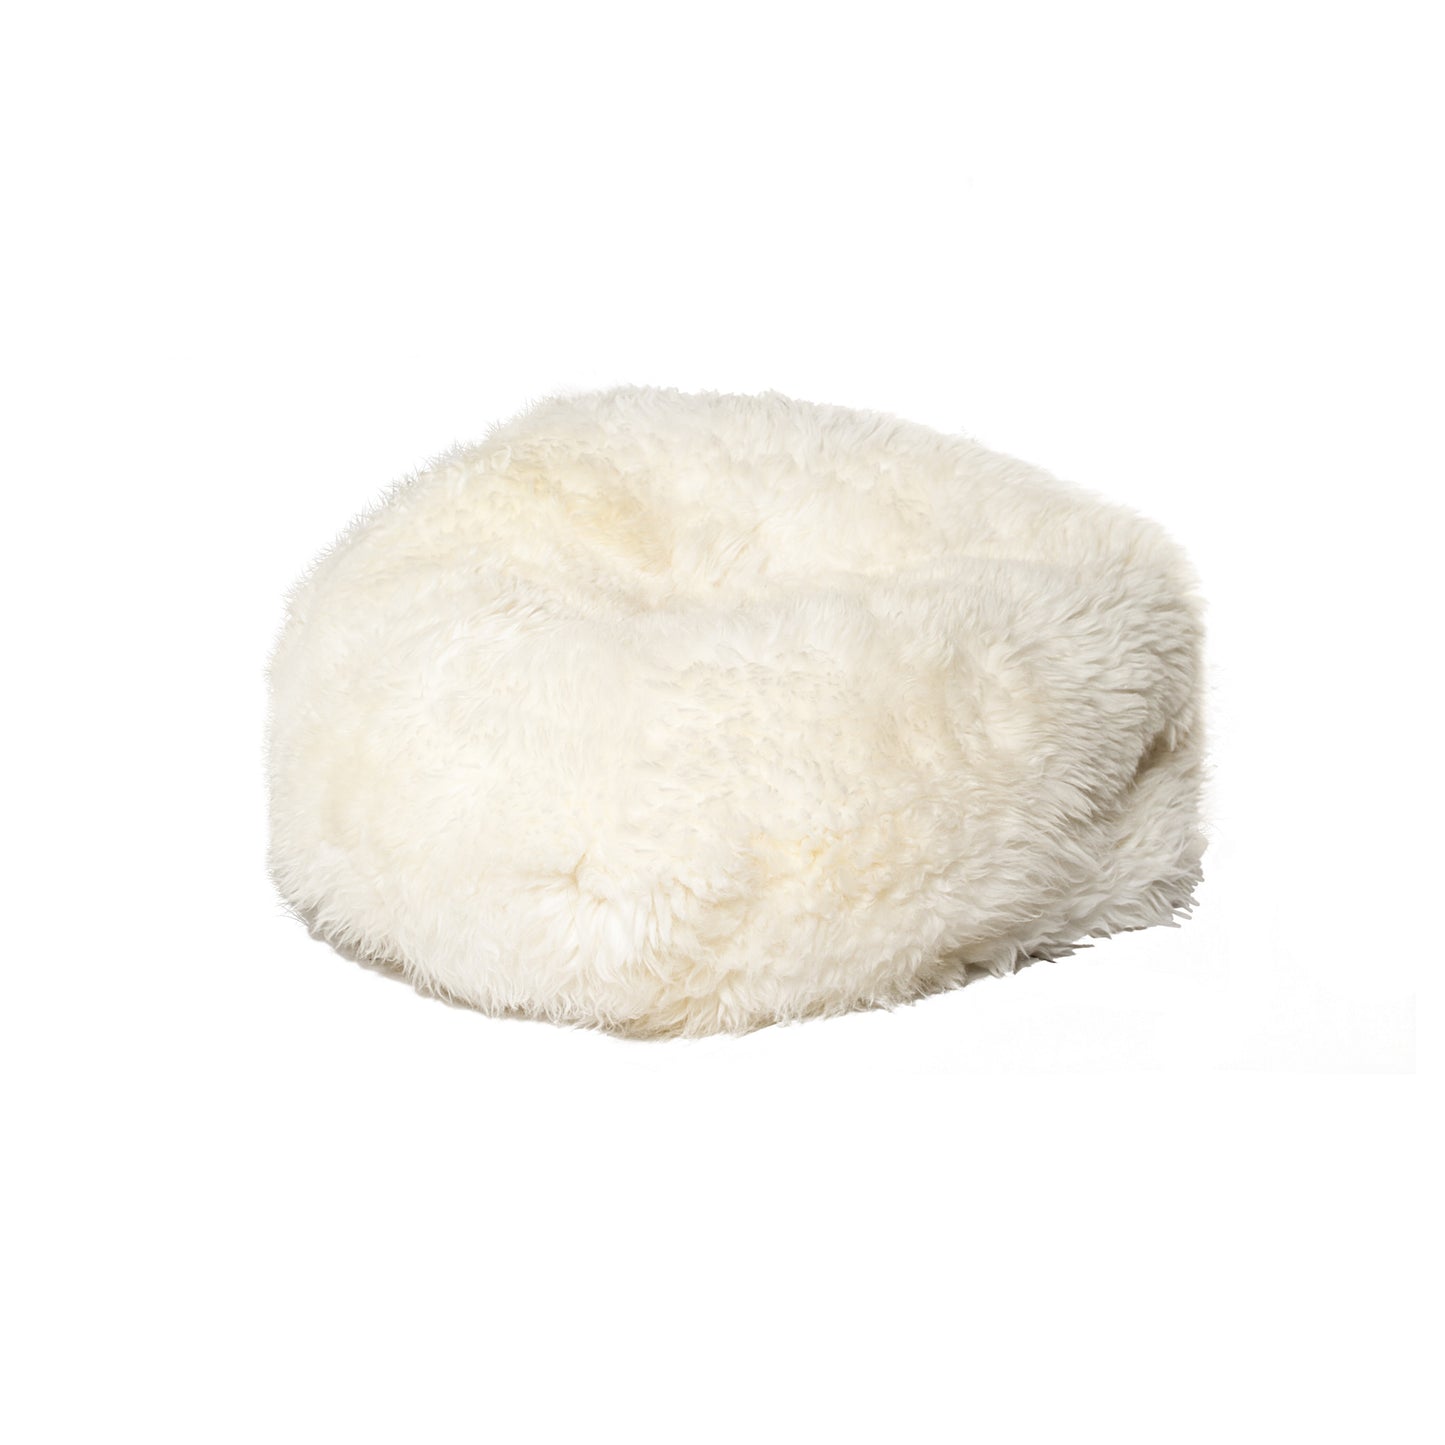 31" X 31" X 31" White Short-Hair Sheepskin Bean Bag